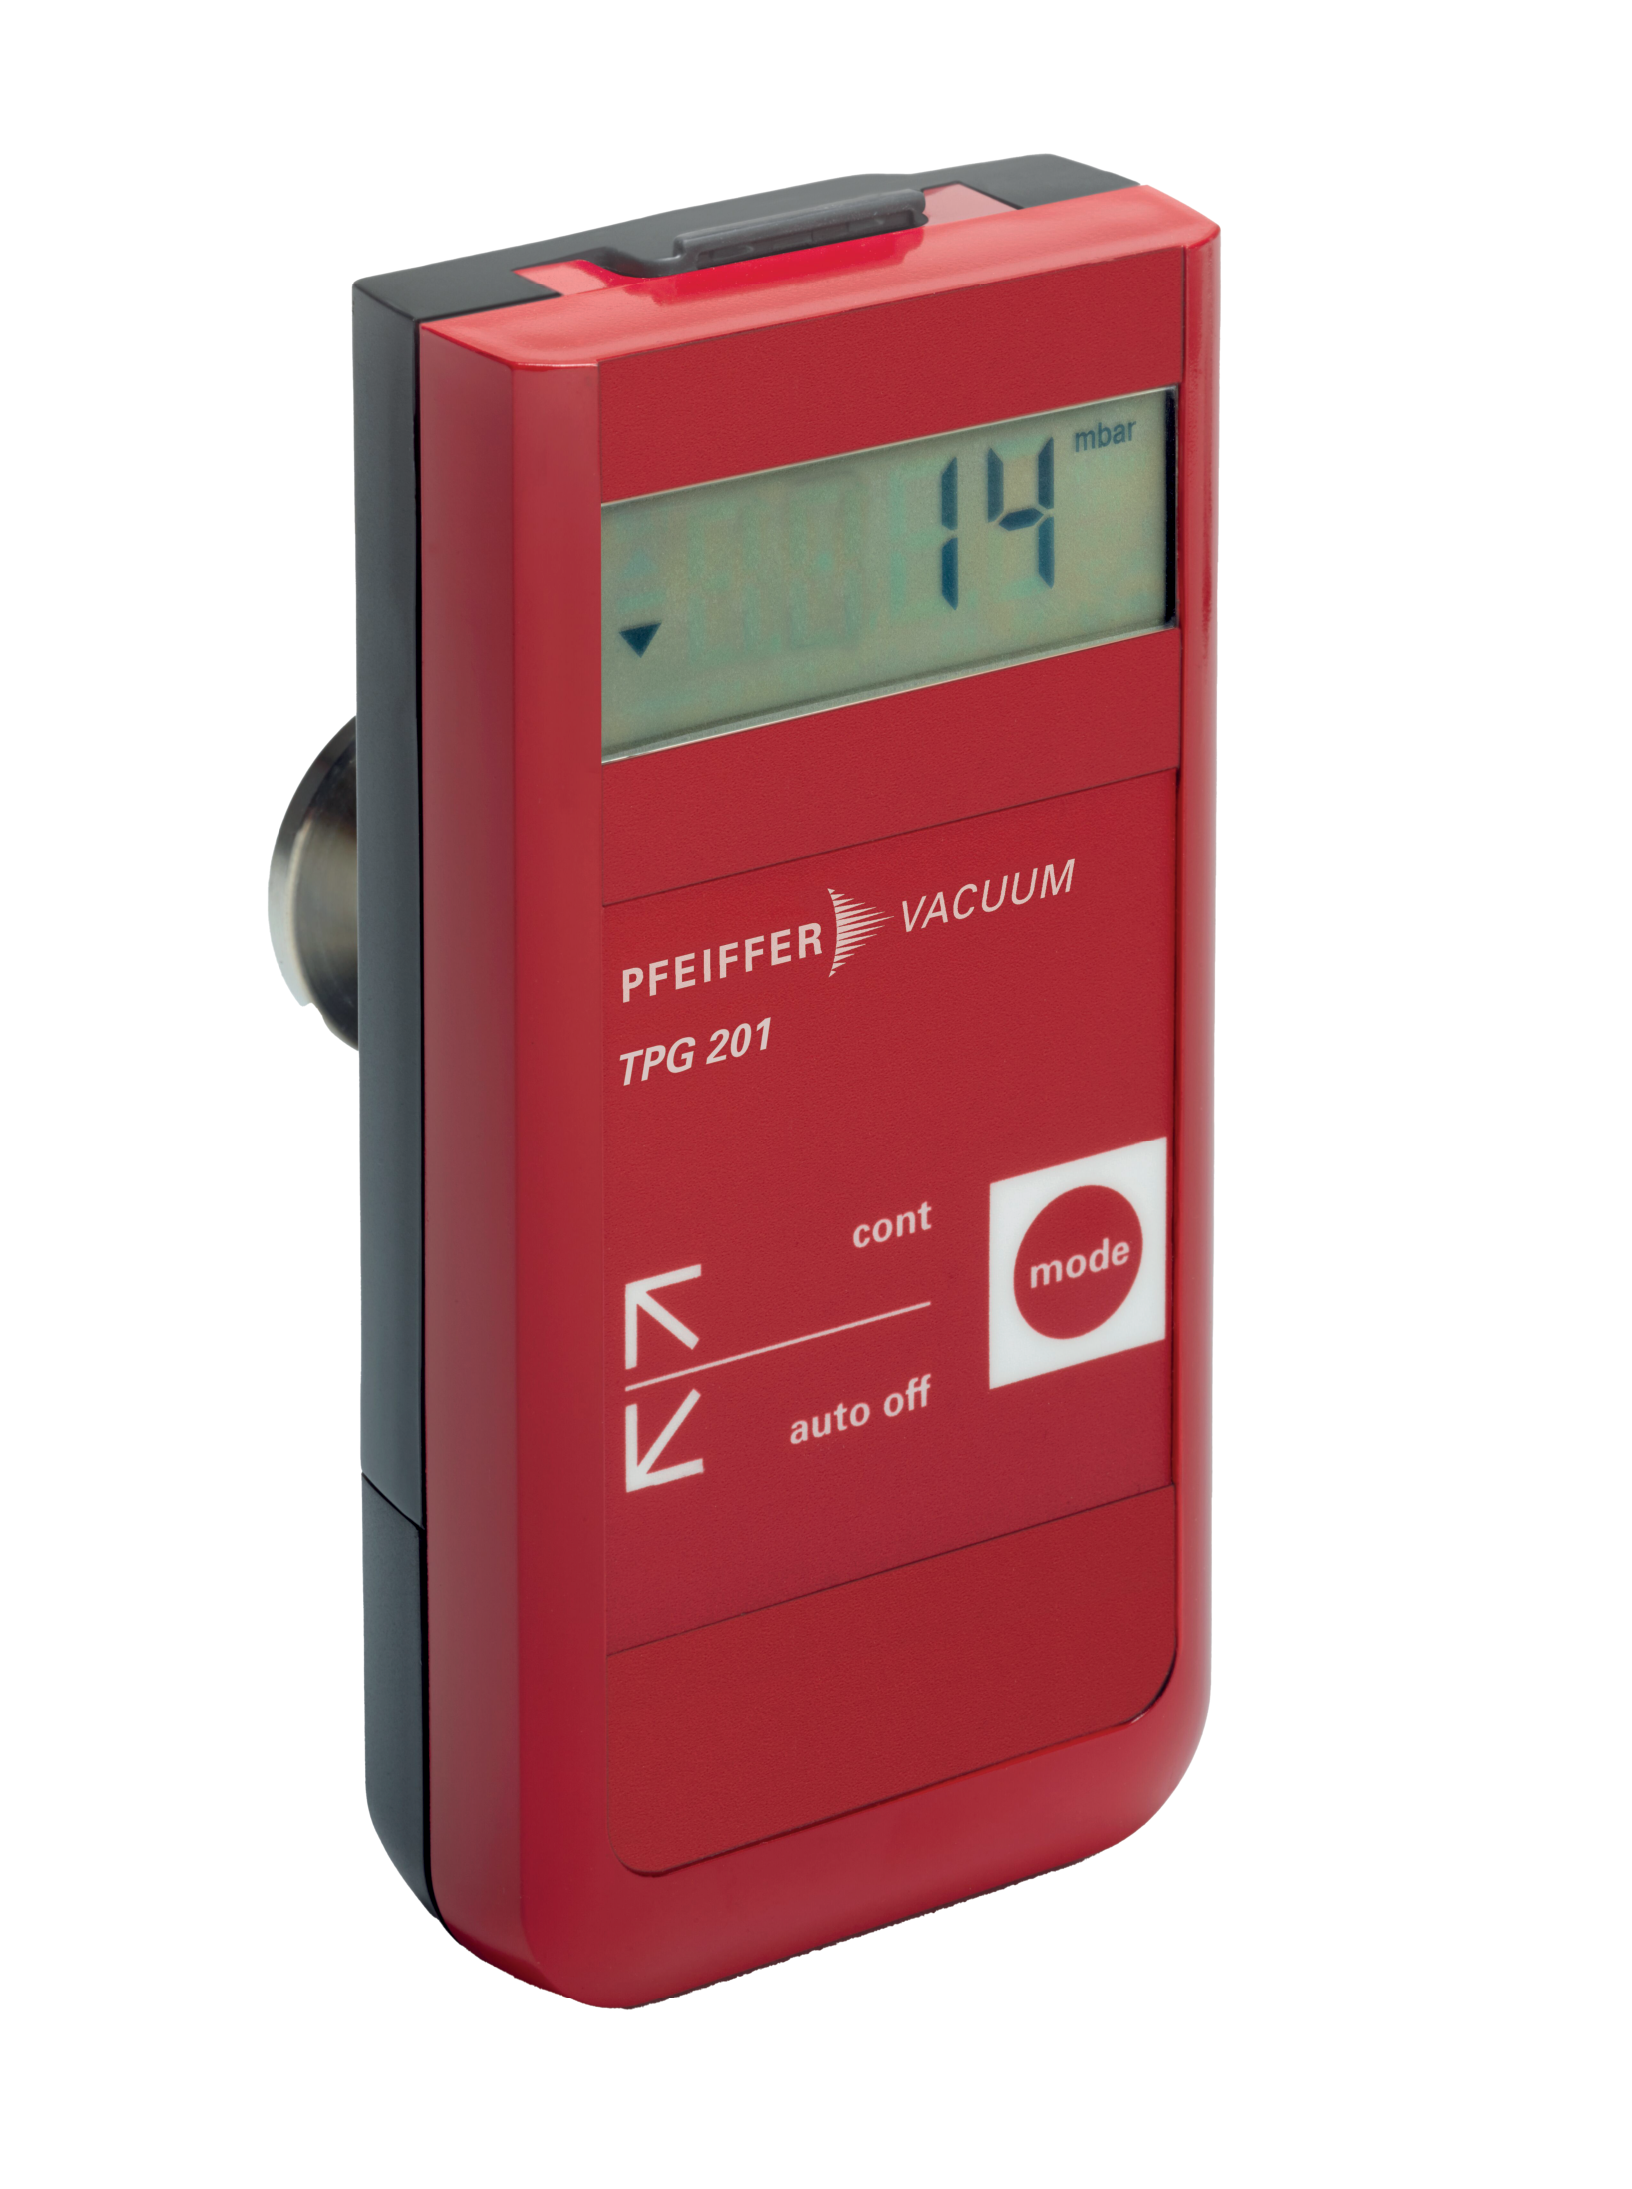 TPG 201, Pirani Handheld measurement instrument